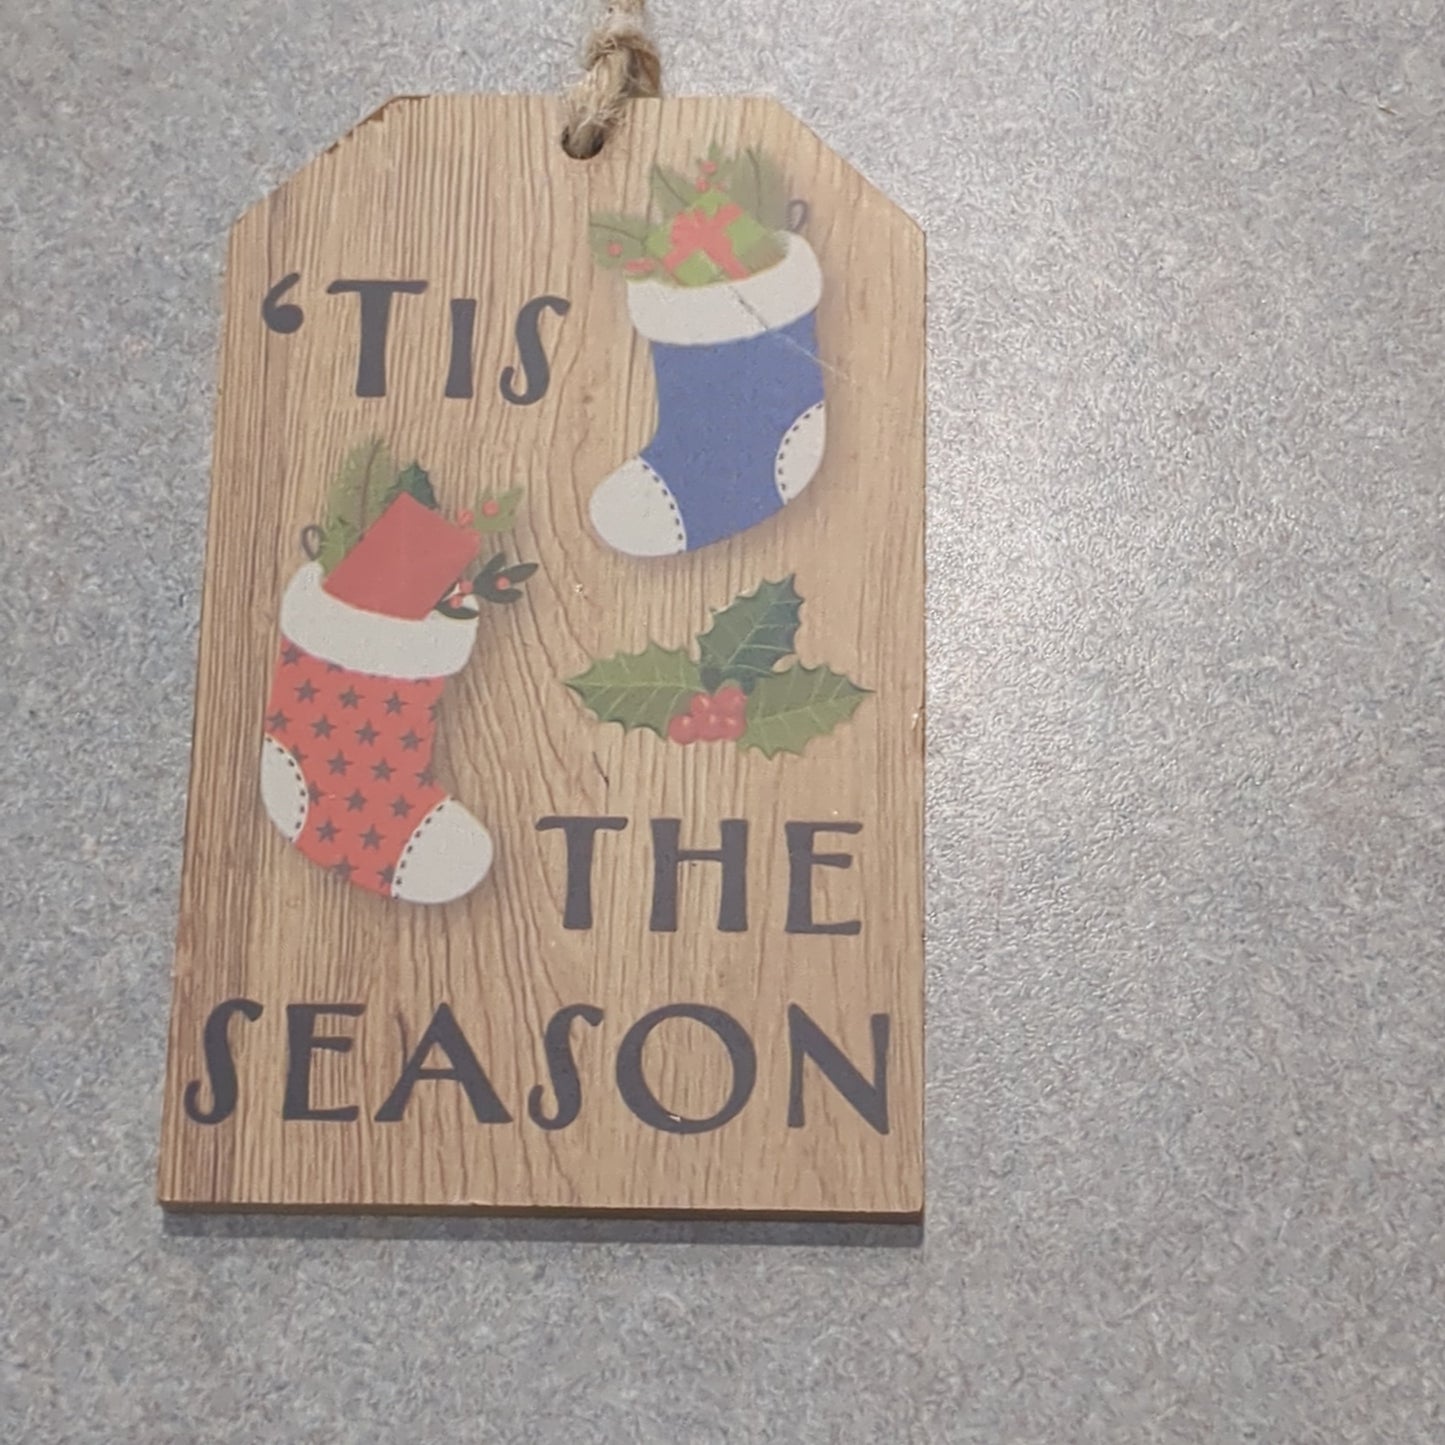 Tag ornaments 'tis the season